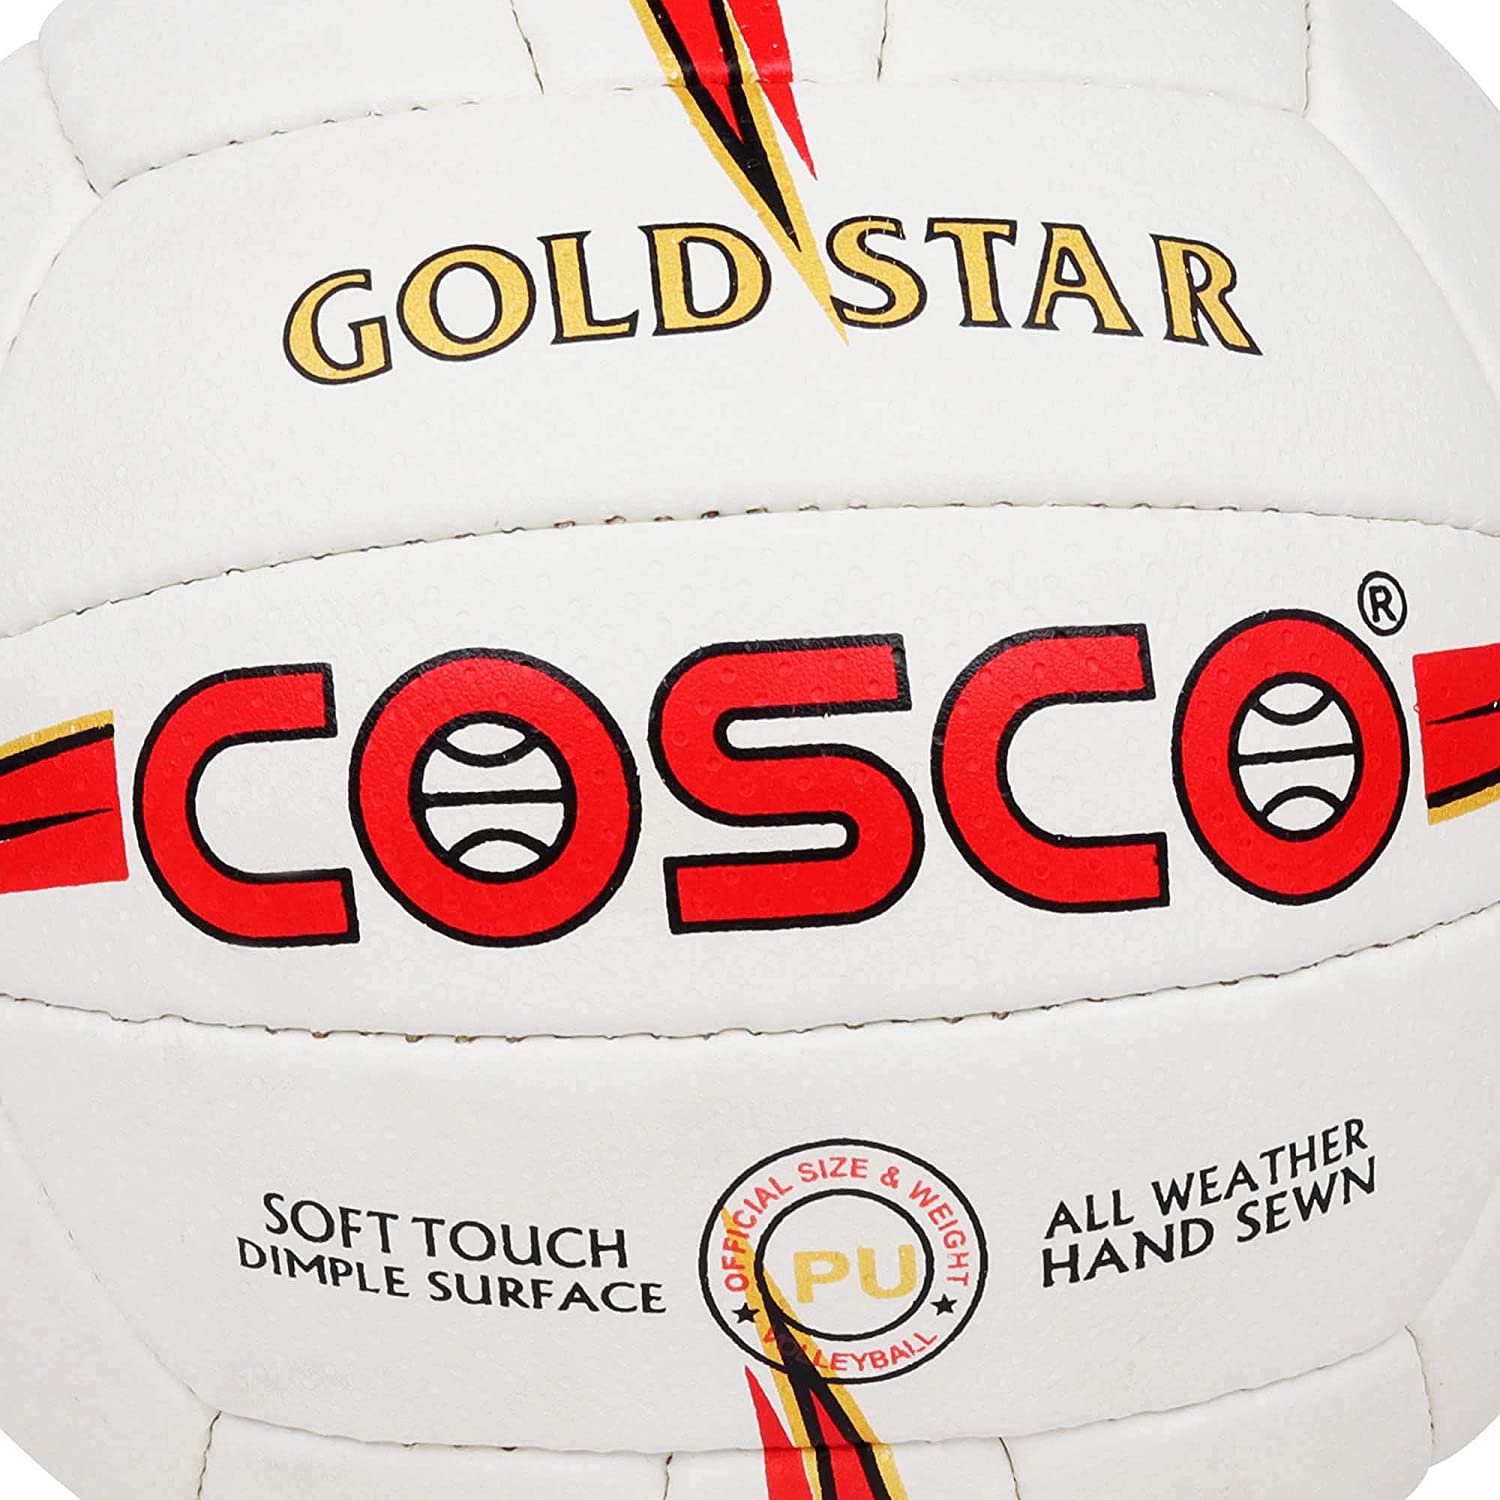 Cosco Gold Star Volley Ball | Volleyball in Dar es salaam Tanzania